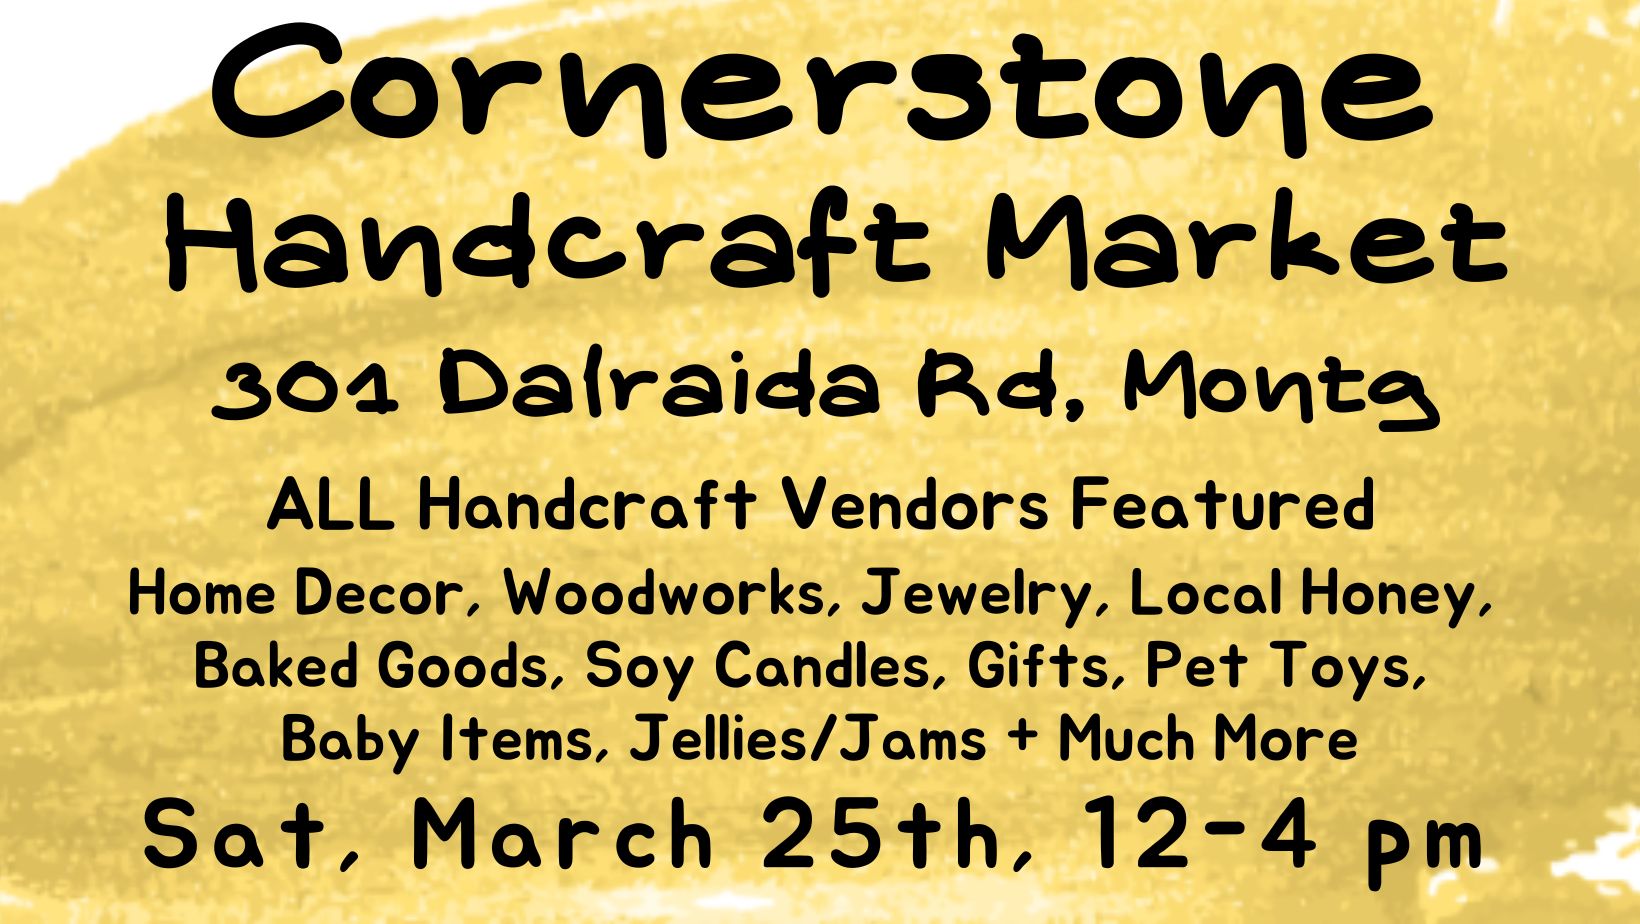 Custom crosses for sale at Cornerstone Handcraft Market